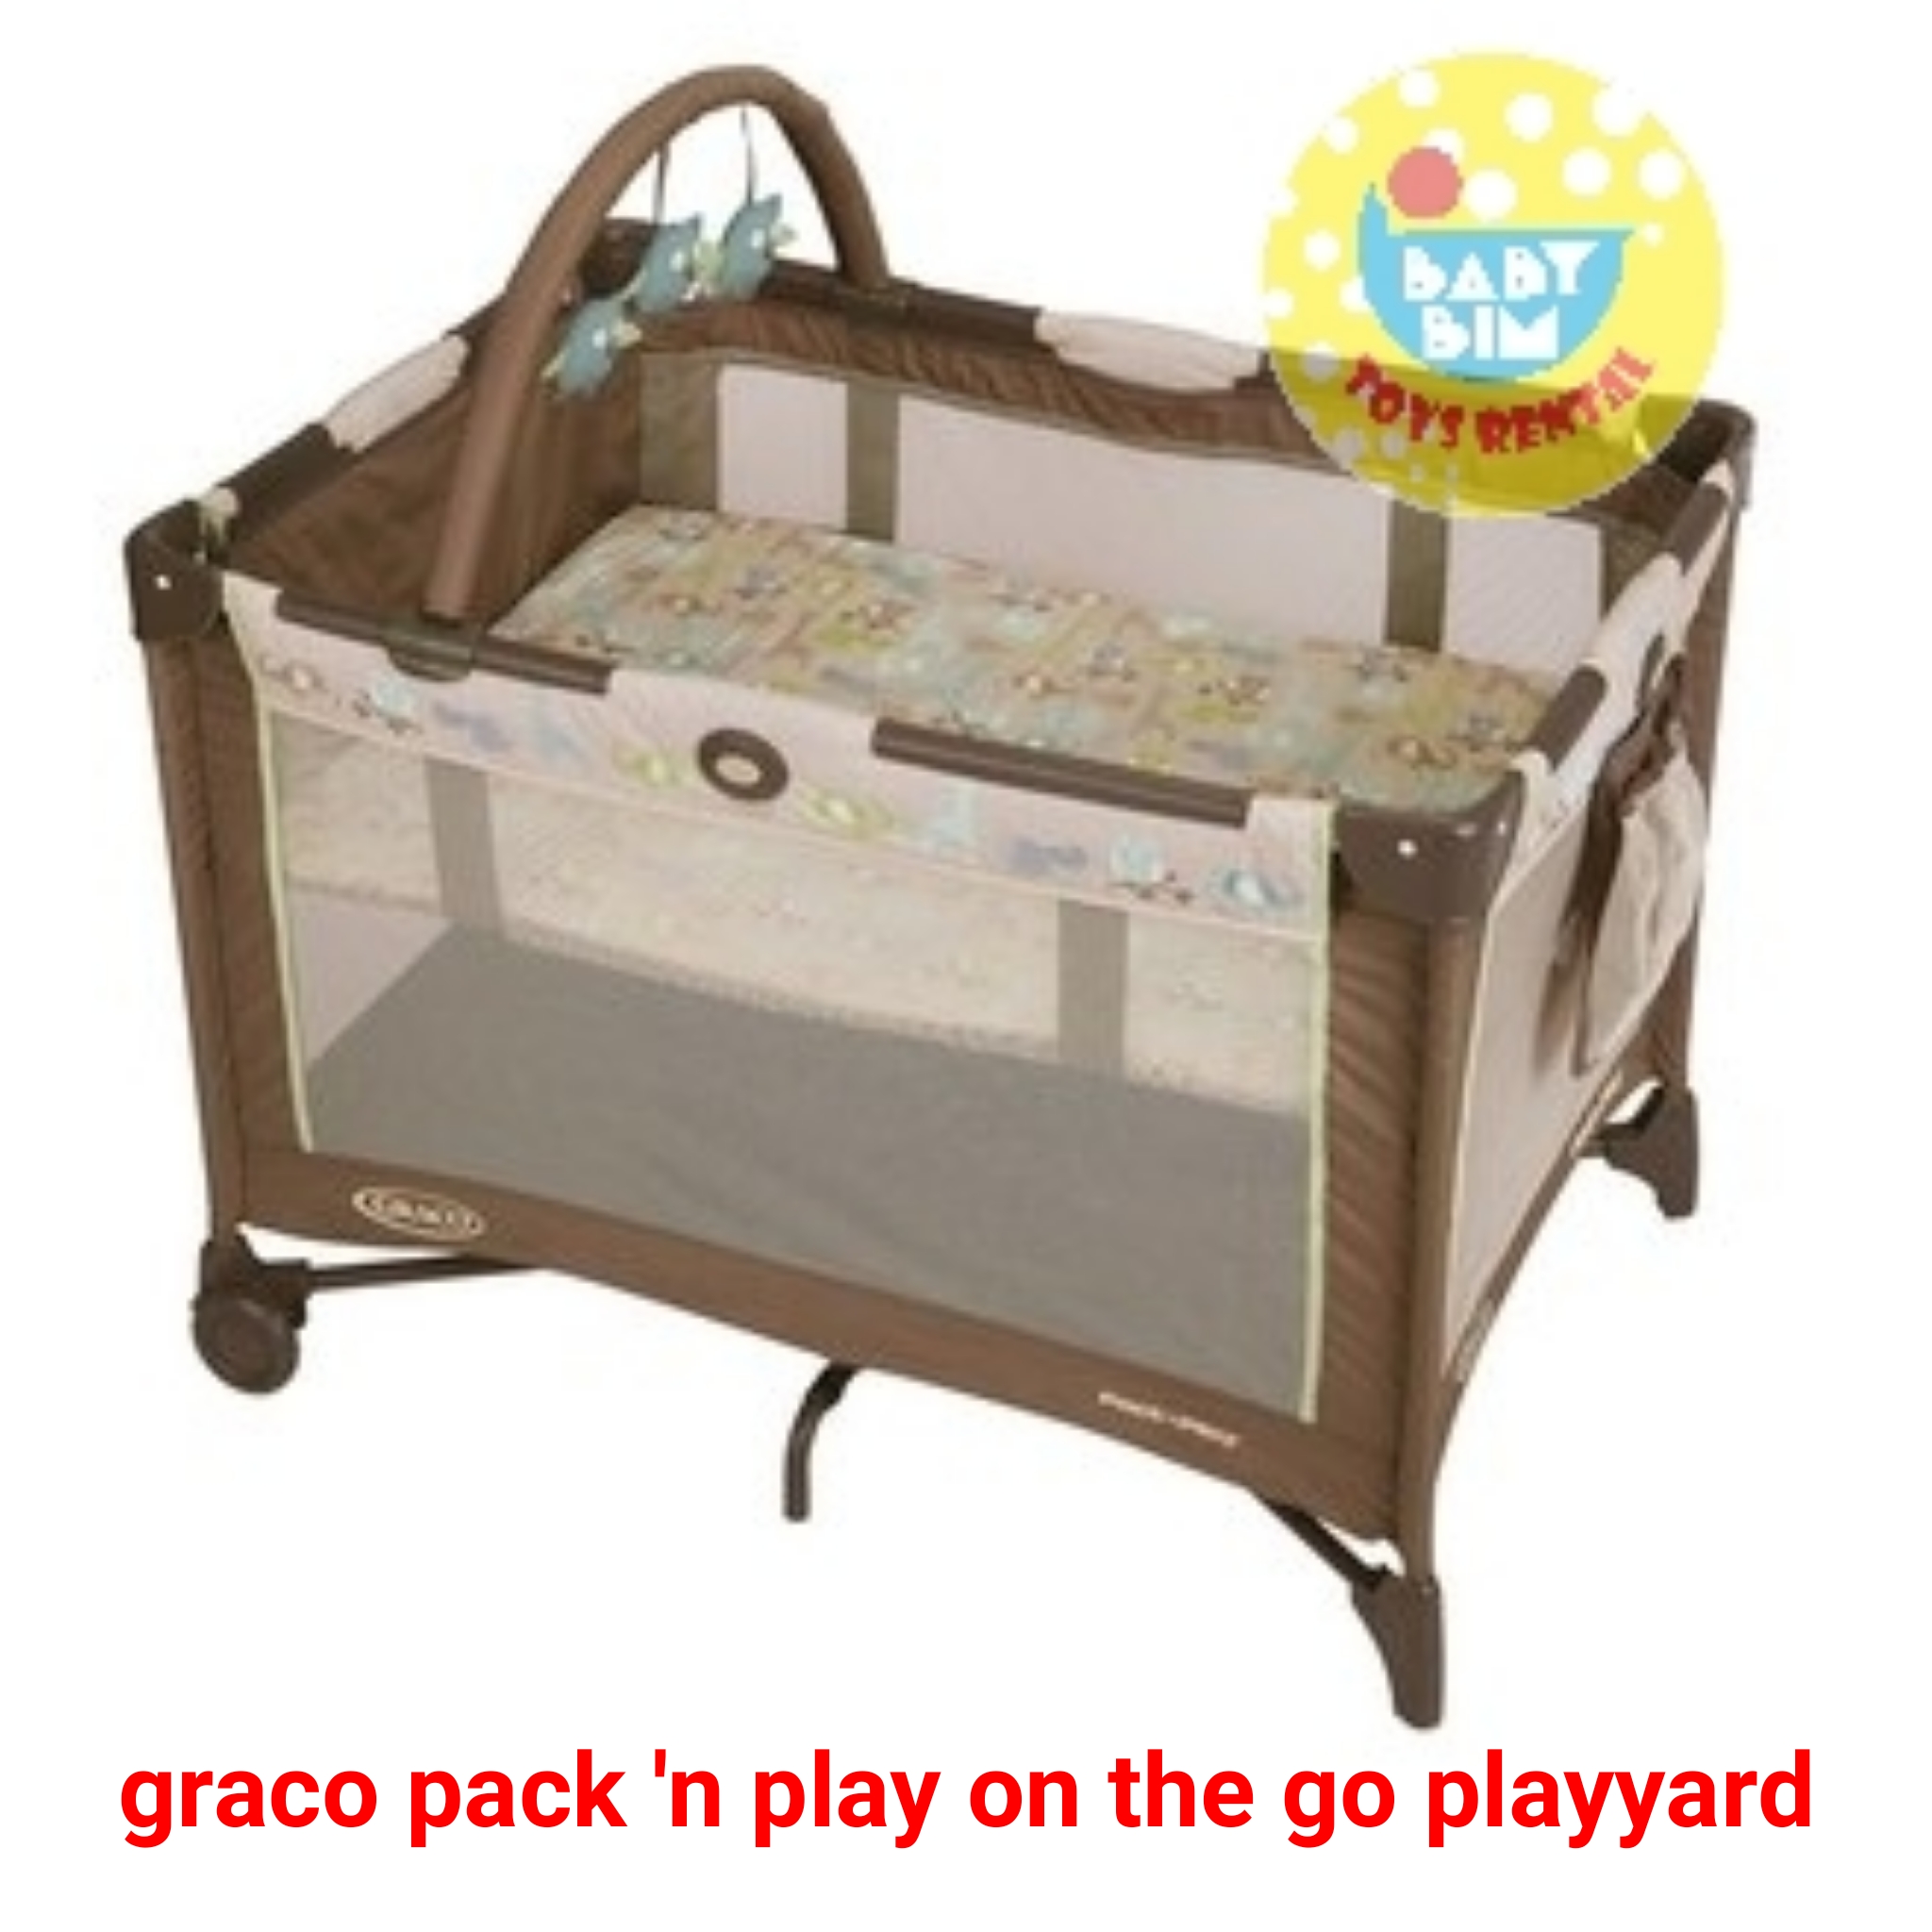 BABY BOX GRACO PACK, PLAY, N GO